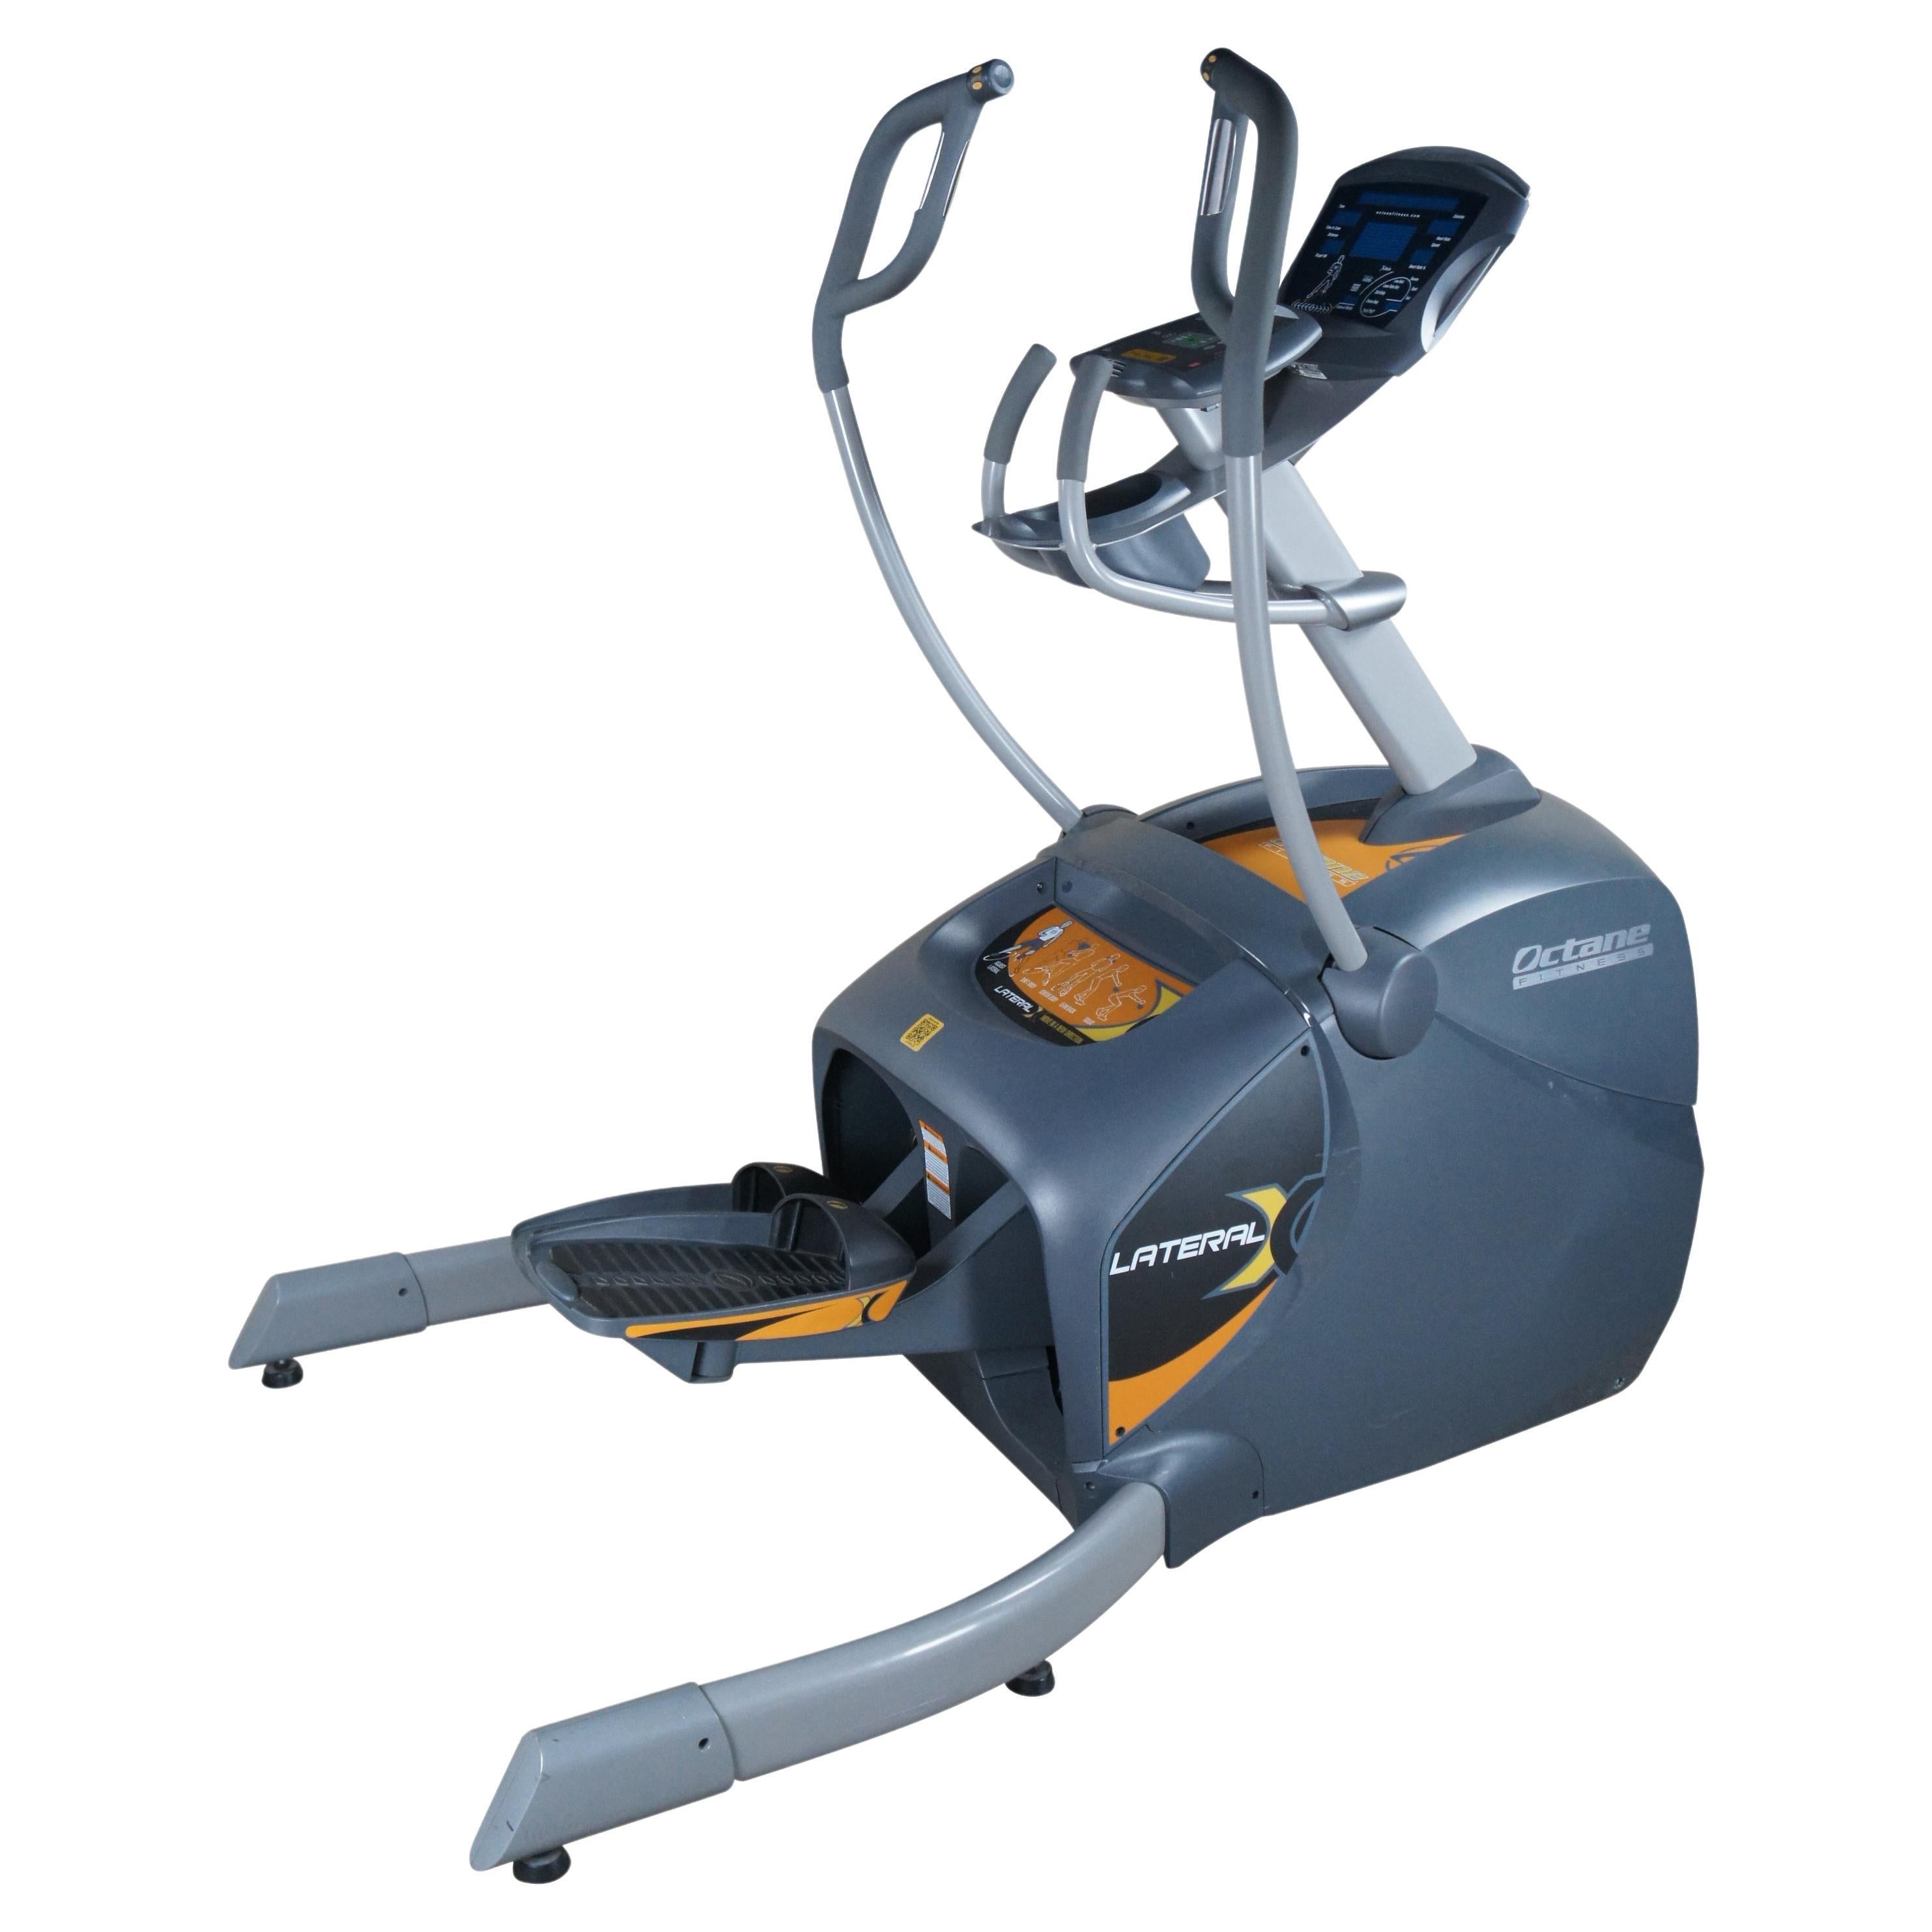 Octane Fitness Lateral Elliptische LX 8000 Crosstrainer Commercial Gym Equipment im Angebot